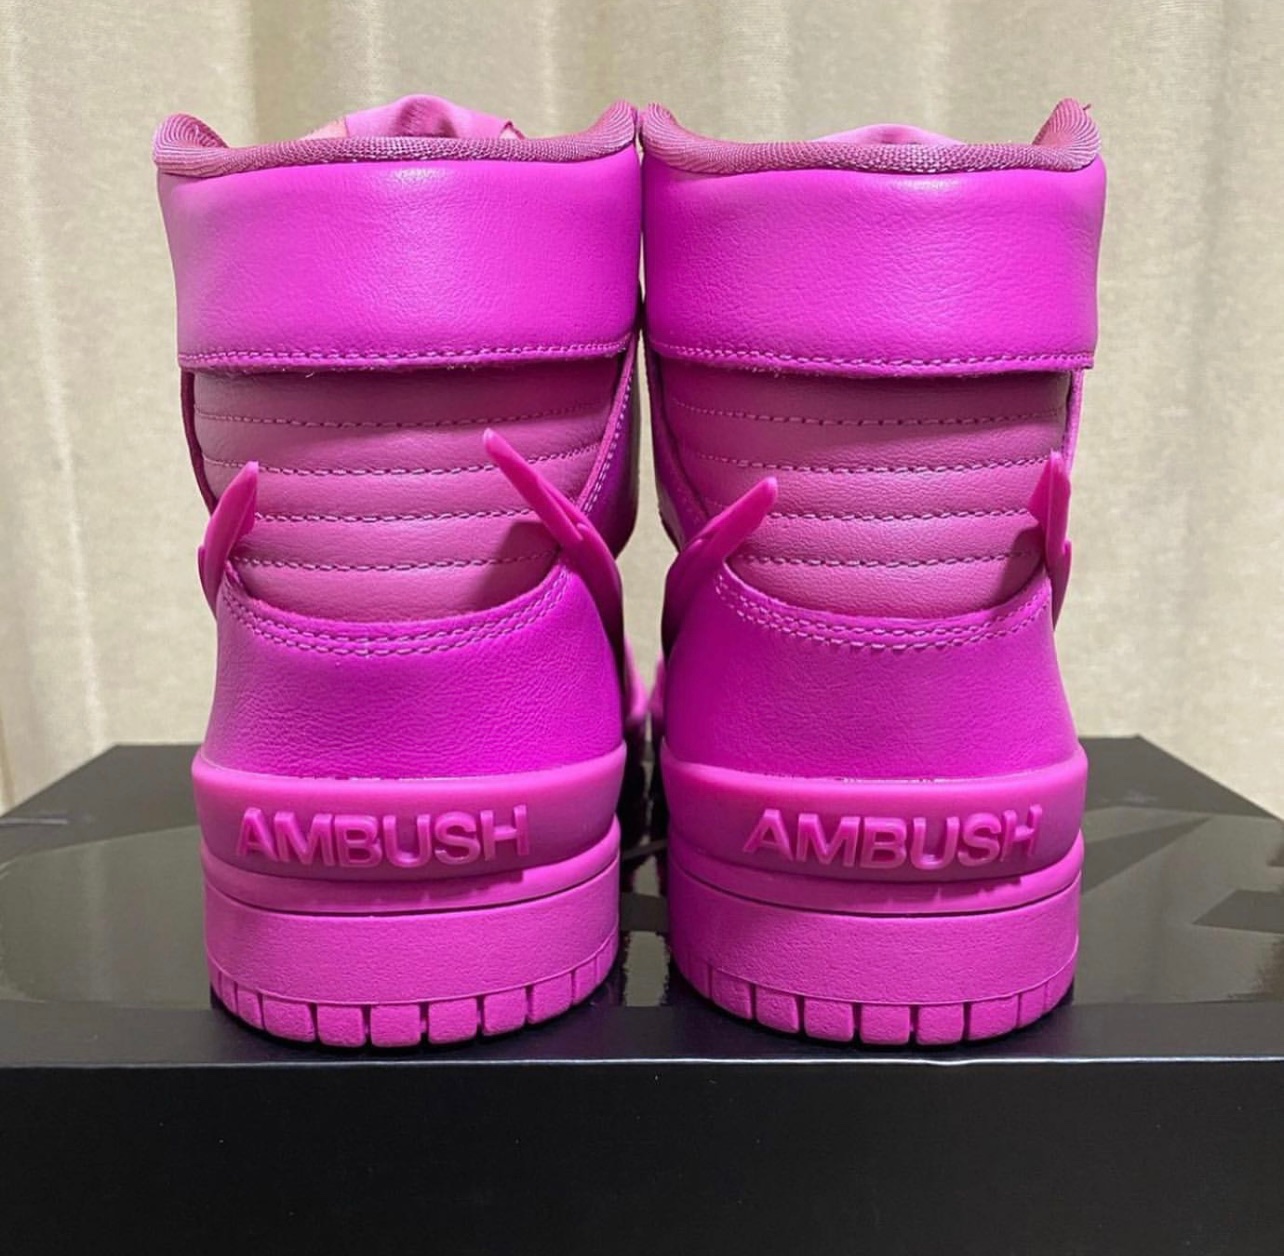 AMBUSH × Nike Dunk Hi “Pink Fuchsia” (アンブッシュ × ナイキ ダンク ハイ “ピンク”)